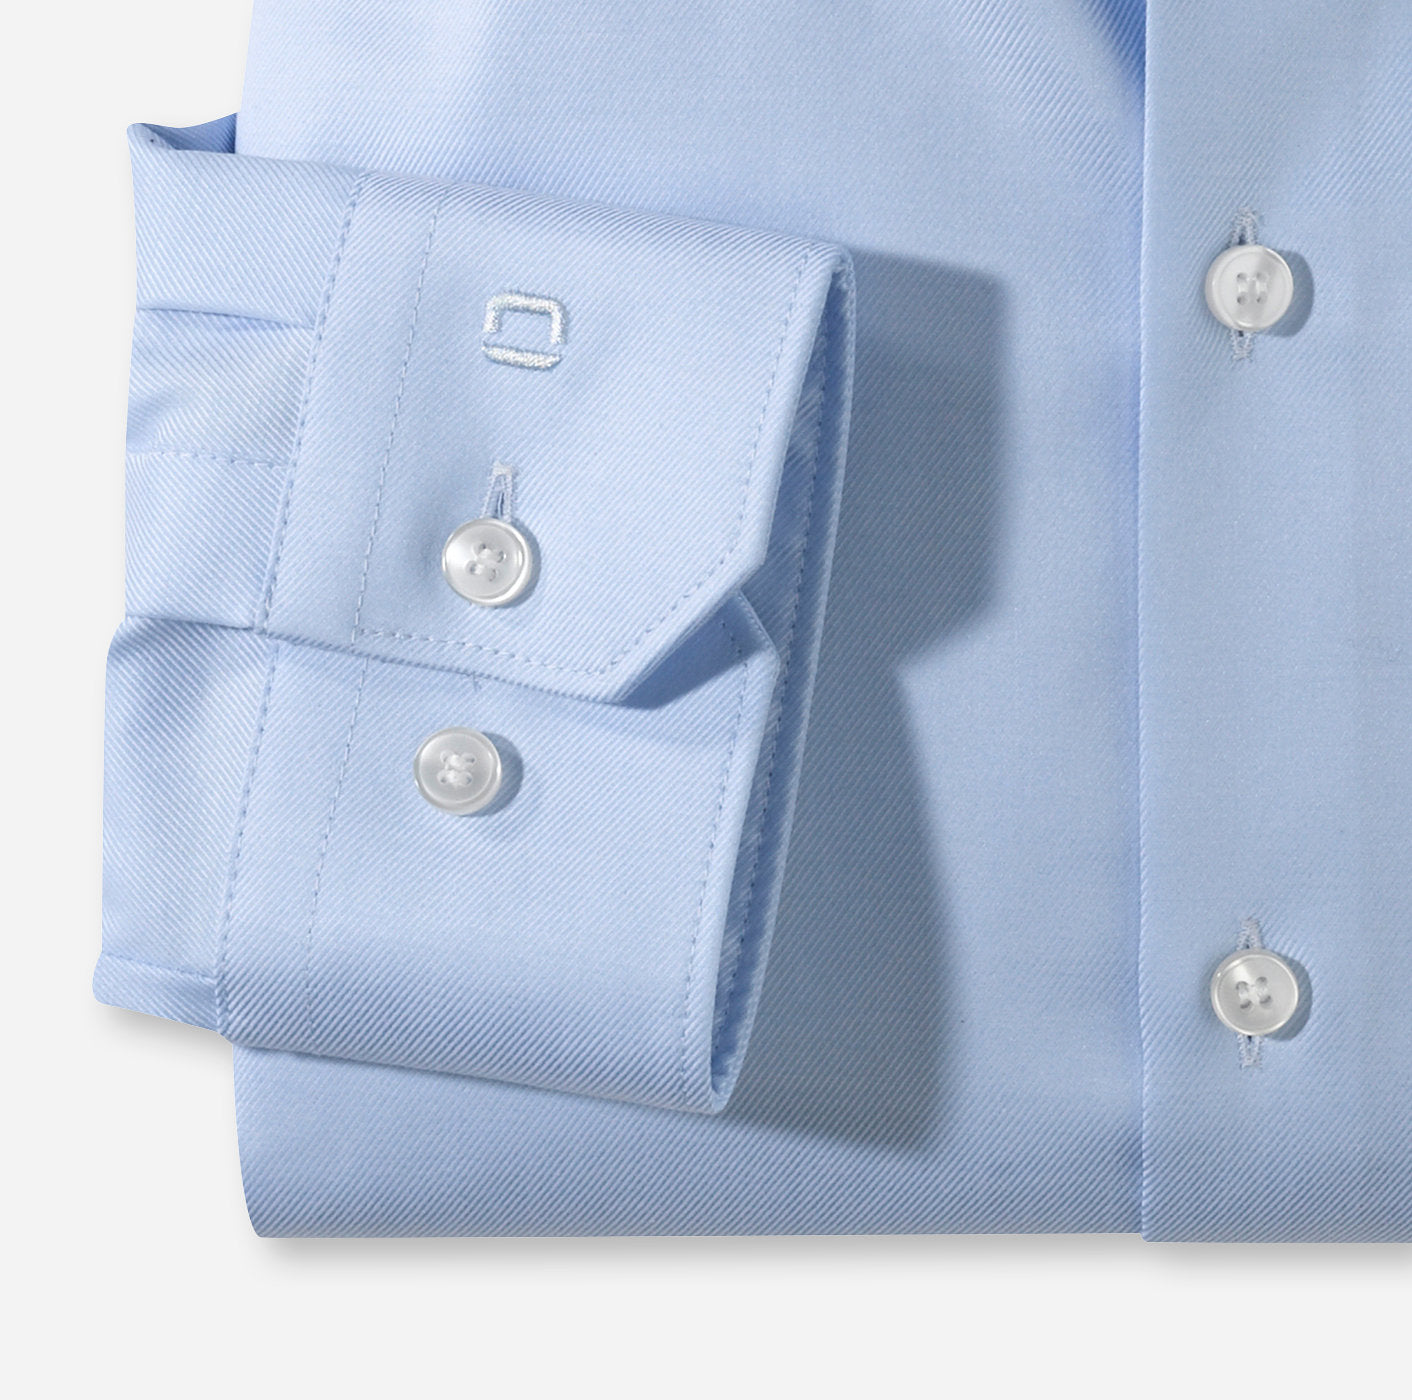 Shirt - Business - Super Slim - White - Patterns - Blue Circles